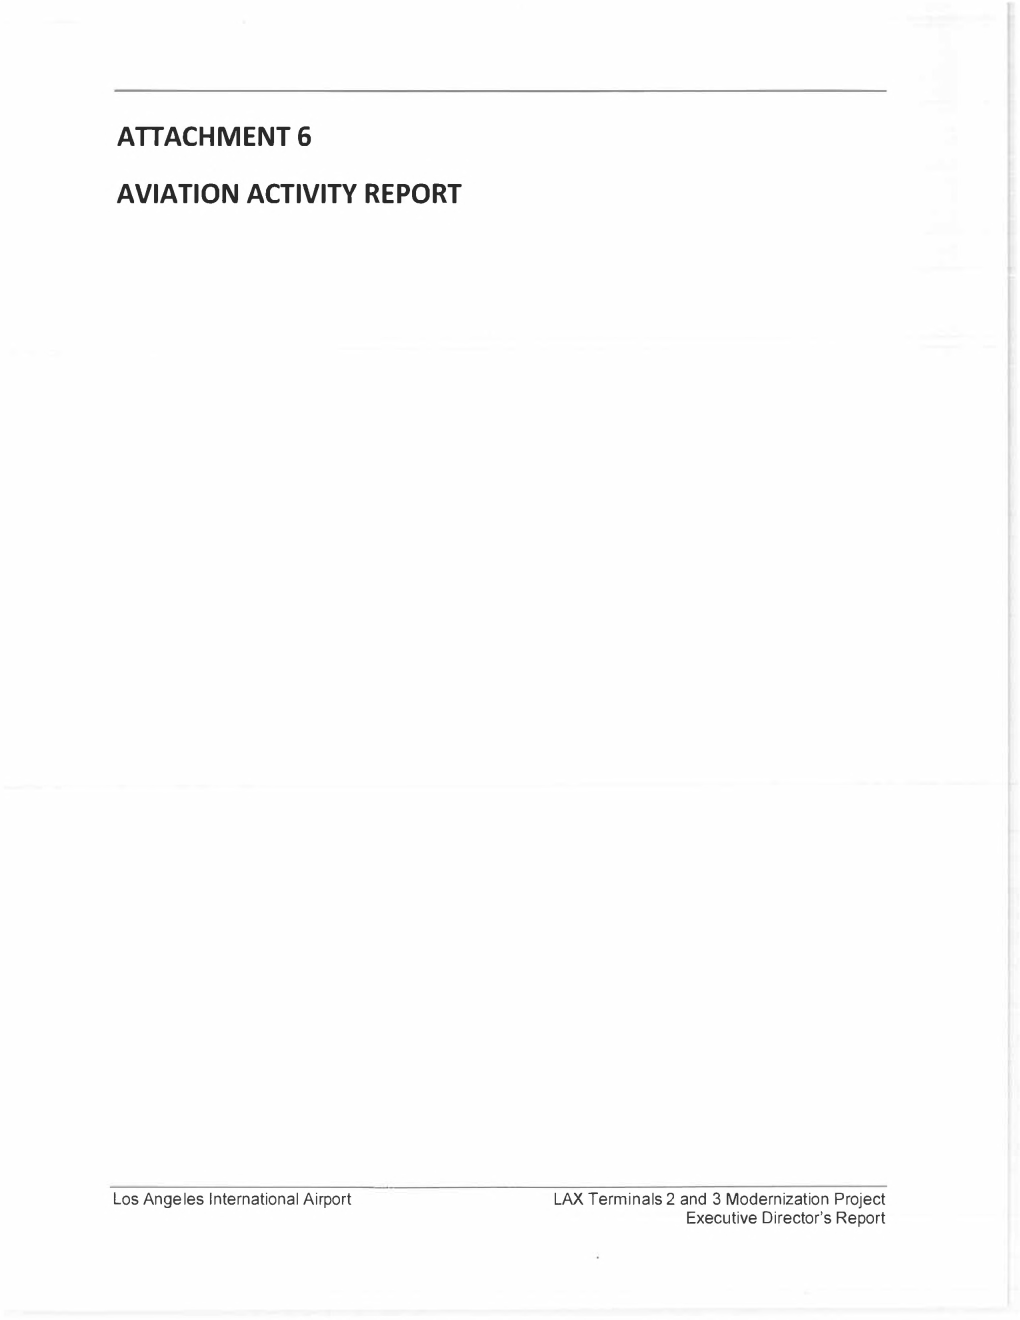 Attachment 6 Aviation Activity Report